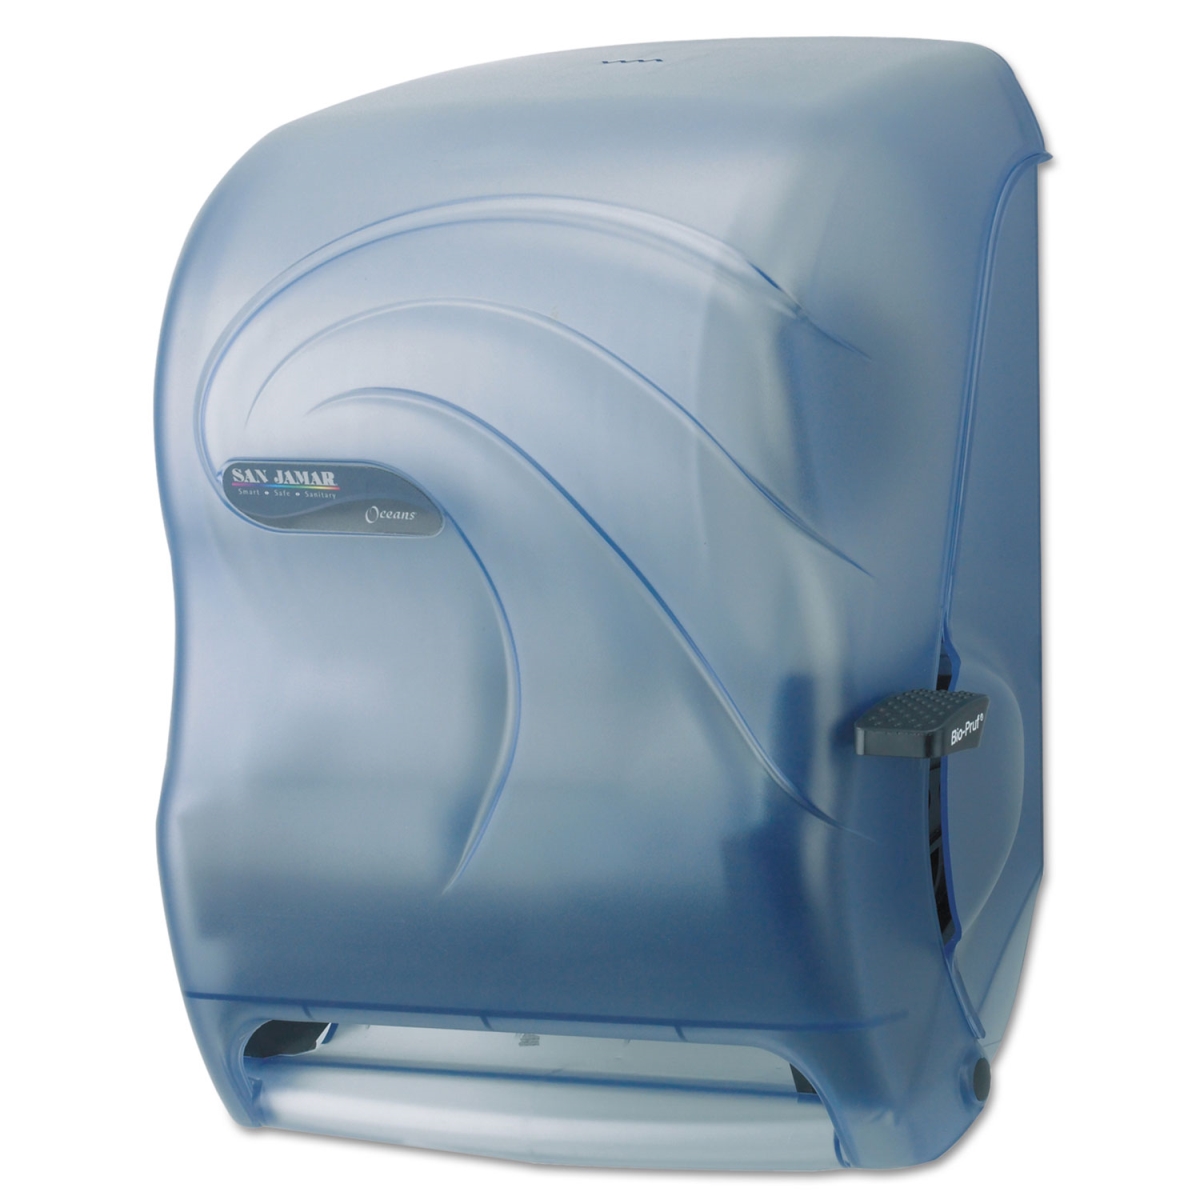 SAN T1190TBL 16.75 x 10 x 12 in. Lever Roll Towel Dispenser - Arctic Blue -  The Colman Group